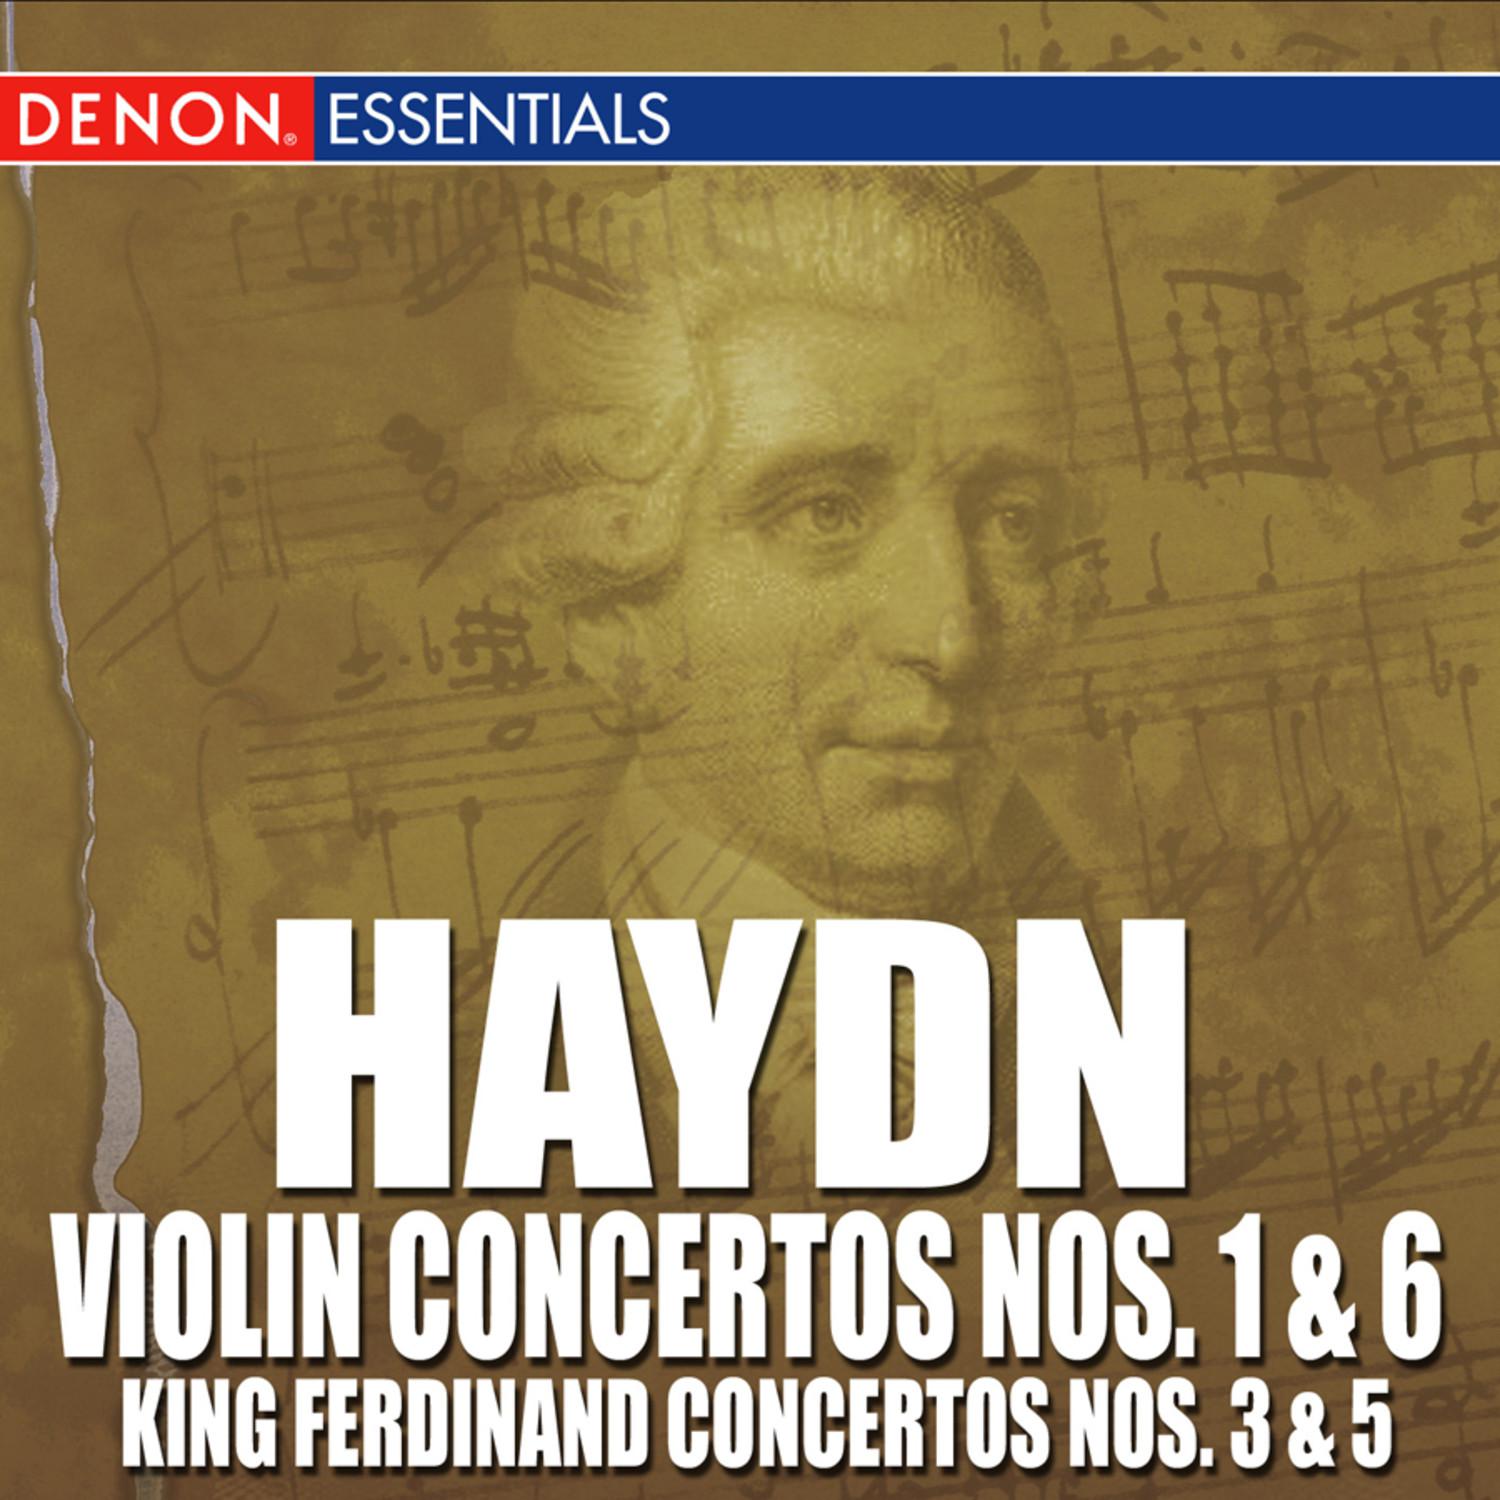 Concerto No. 3 for King Ferdinand IV of Napoli in G Major, Hob. VII / 3 "Lyren Concerto No. 3": II. Romanza: Andante